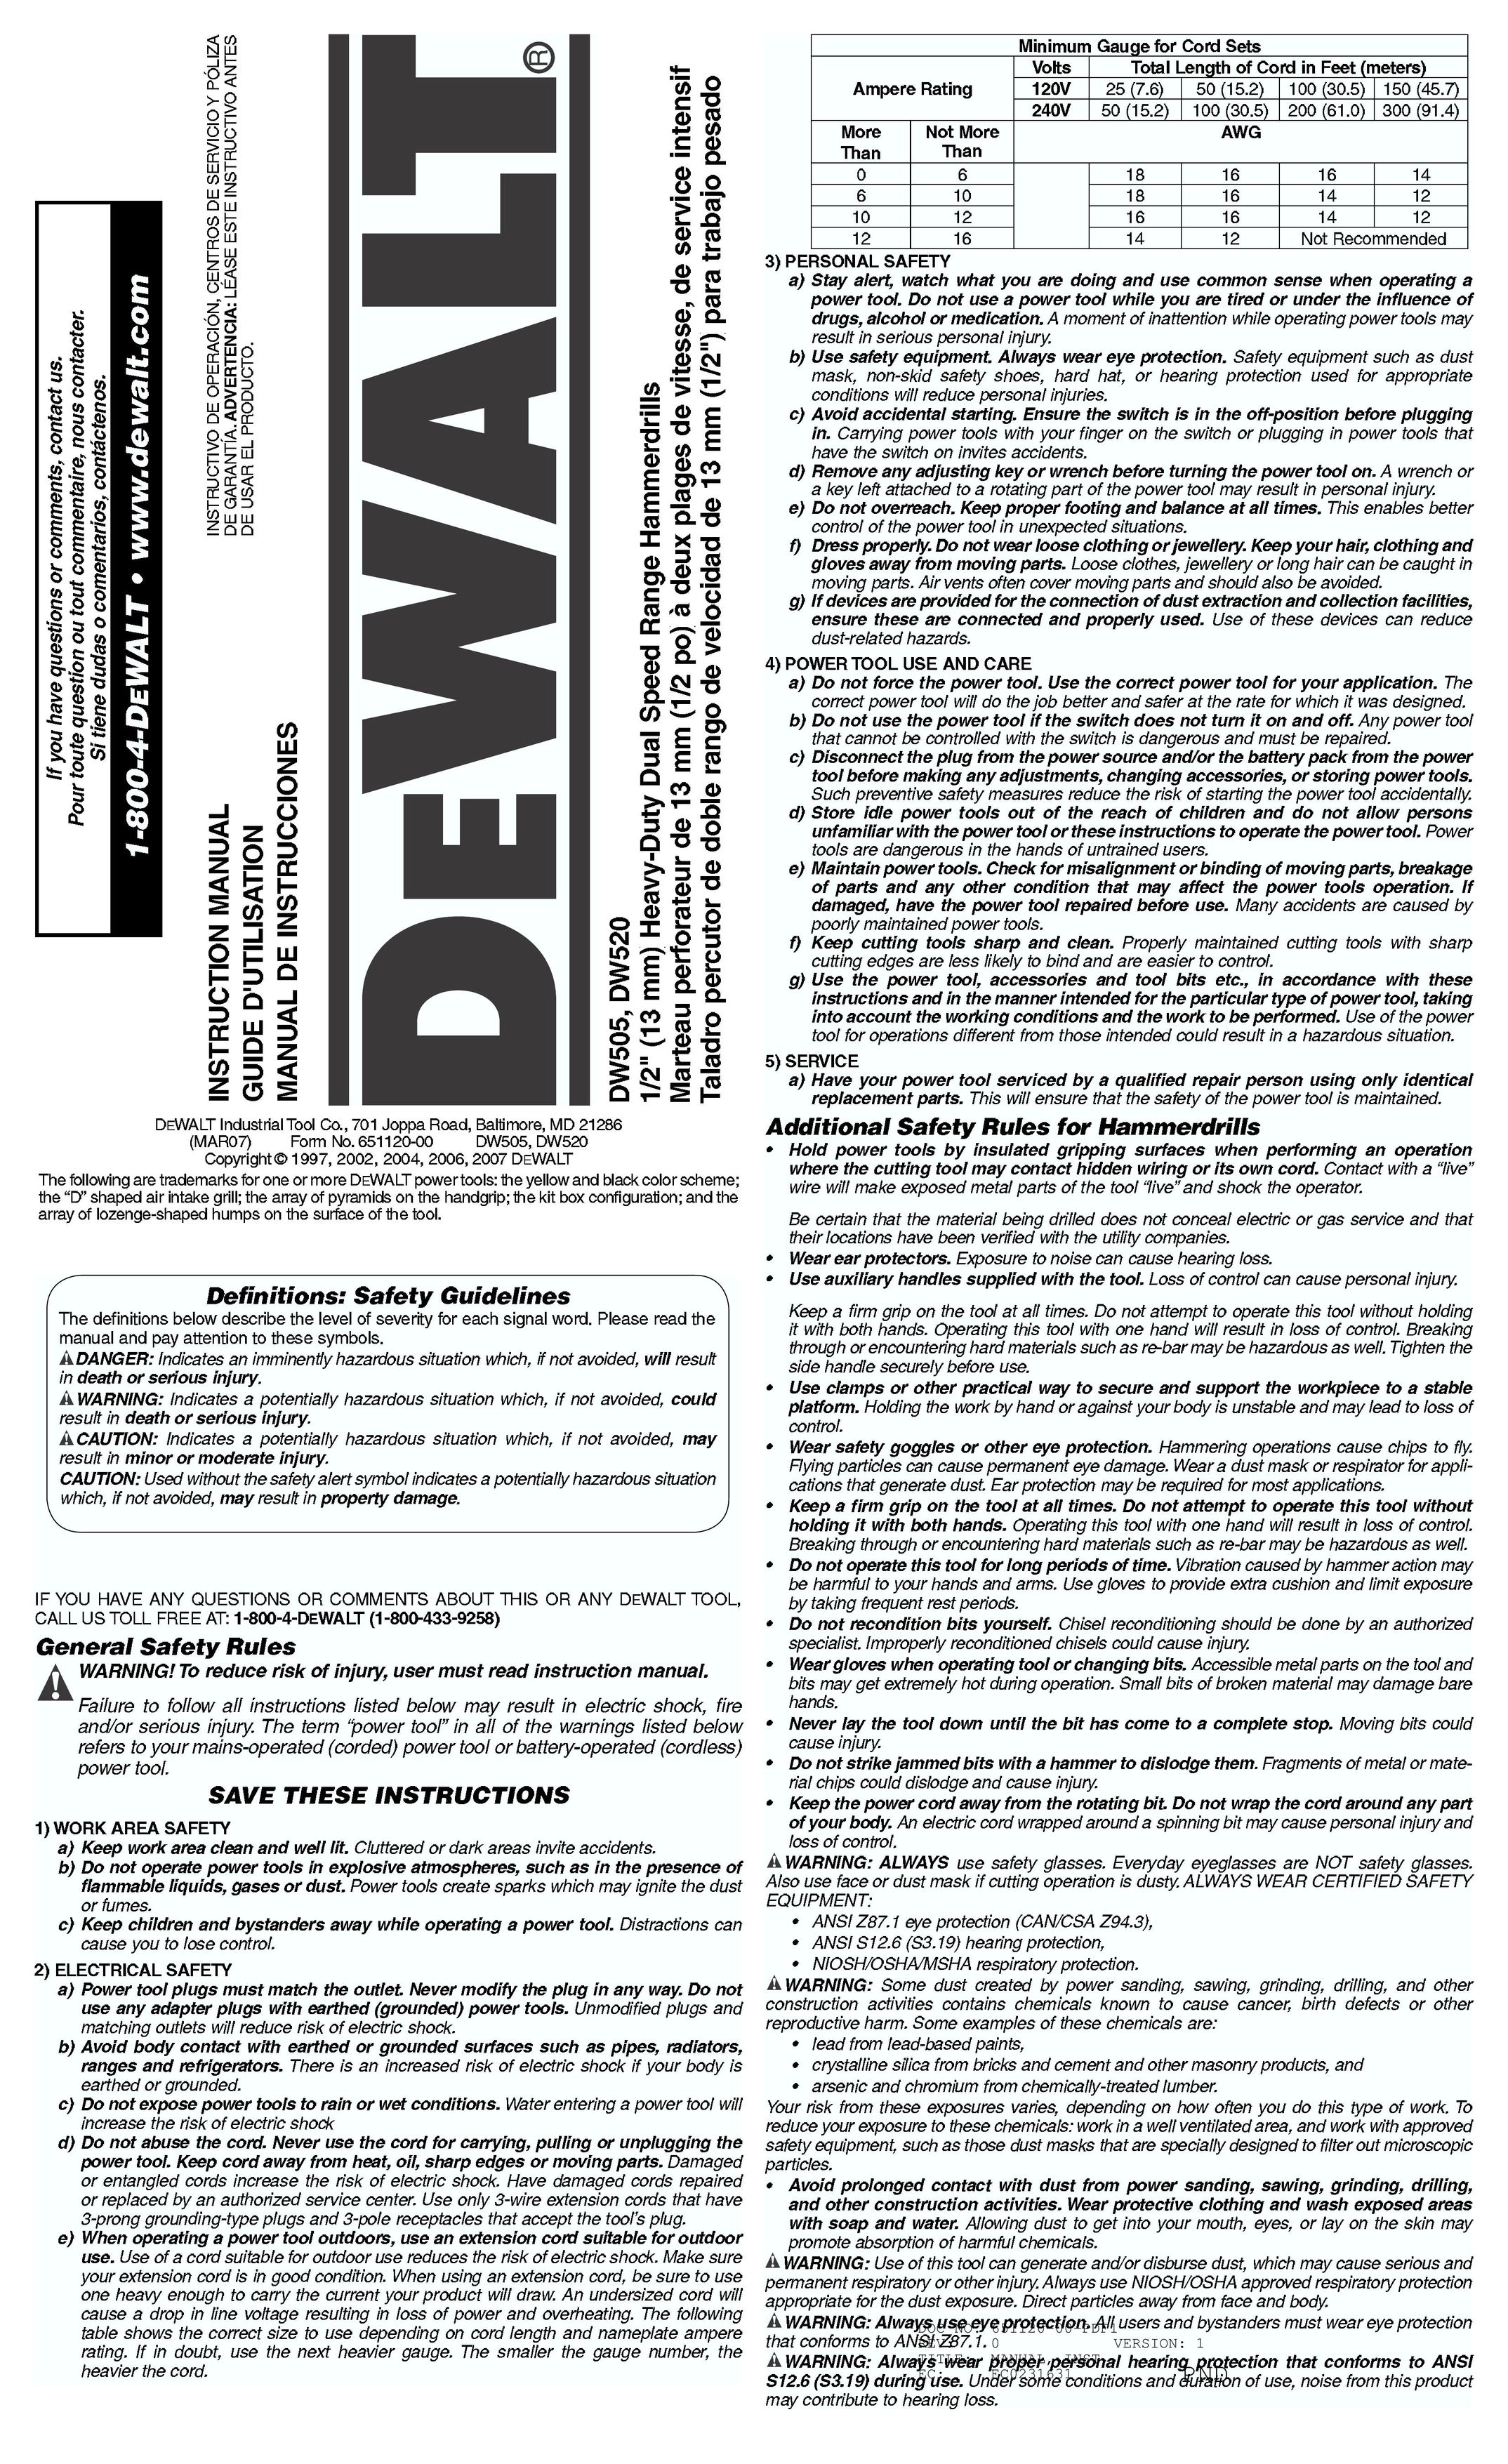 DeWalt DW505 Drill User Manual